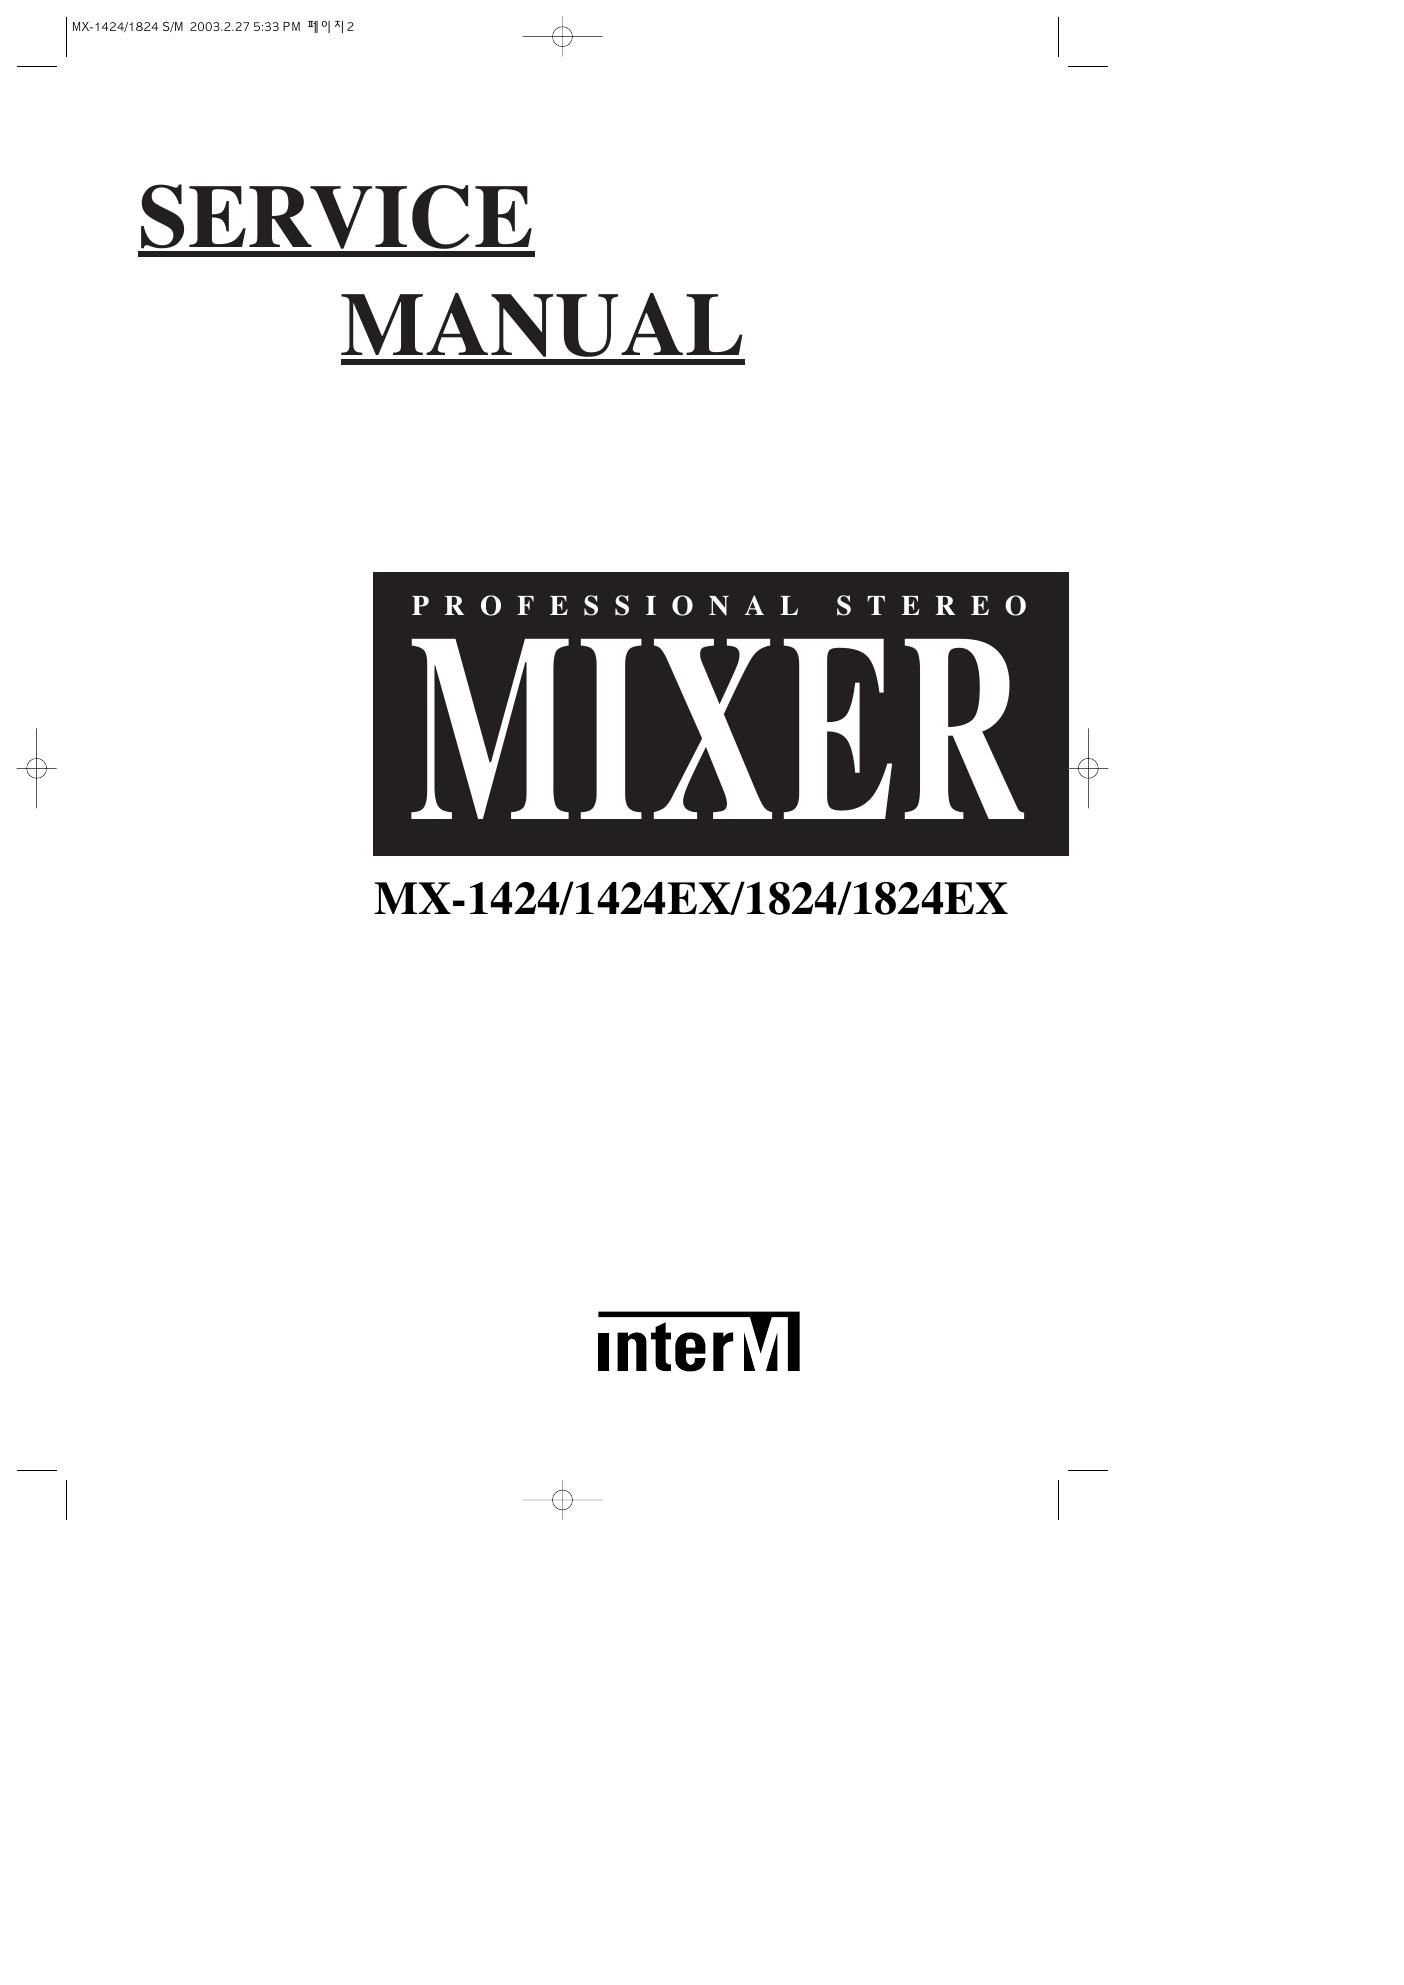 interm mx 1424 1824 mixer